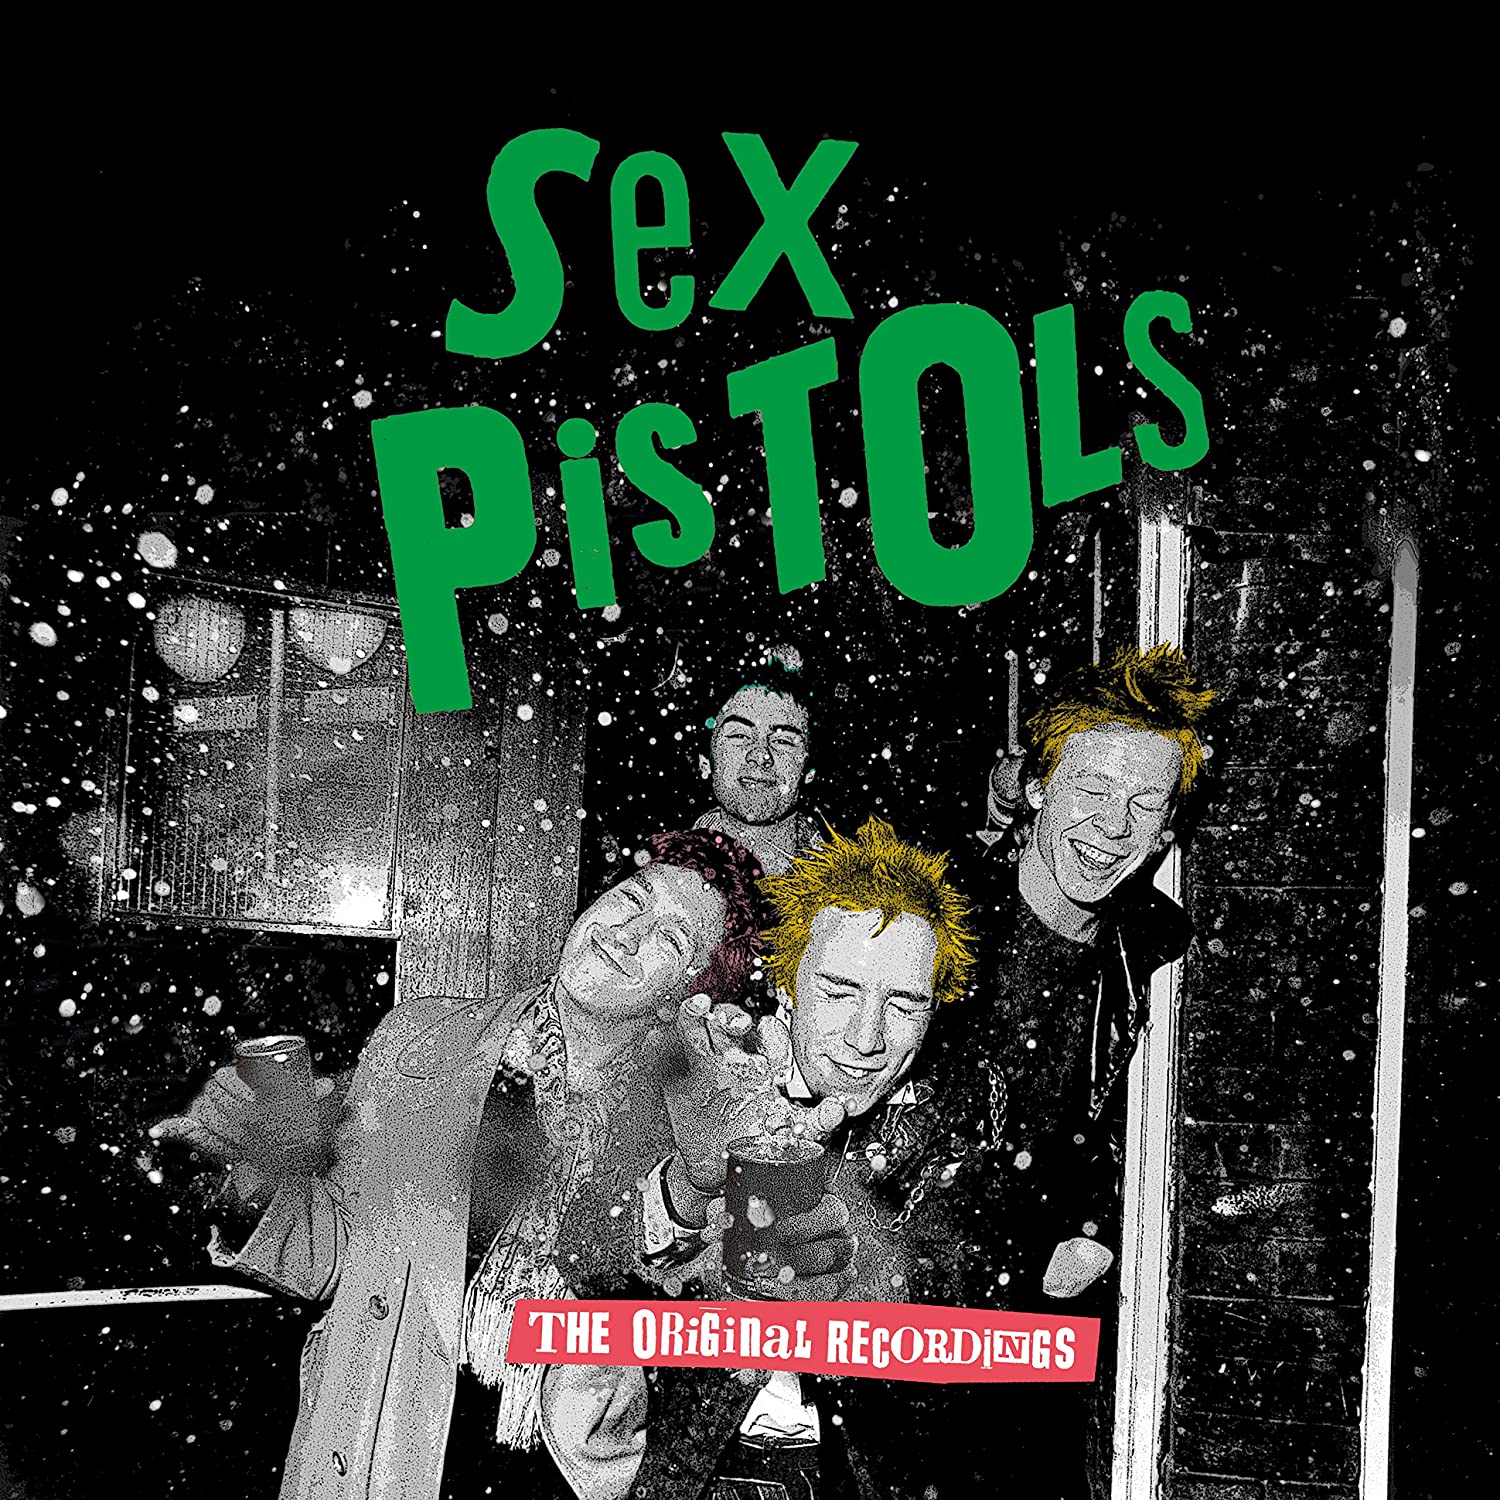 hennemusic: Sex Pistols announce new compilation The Original 